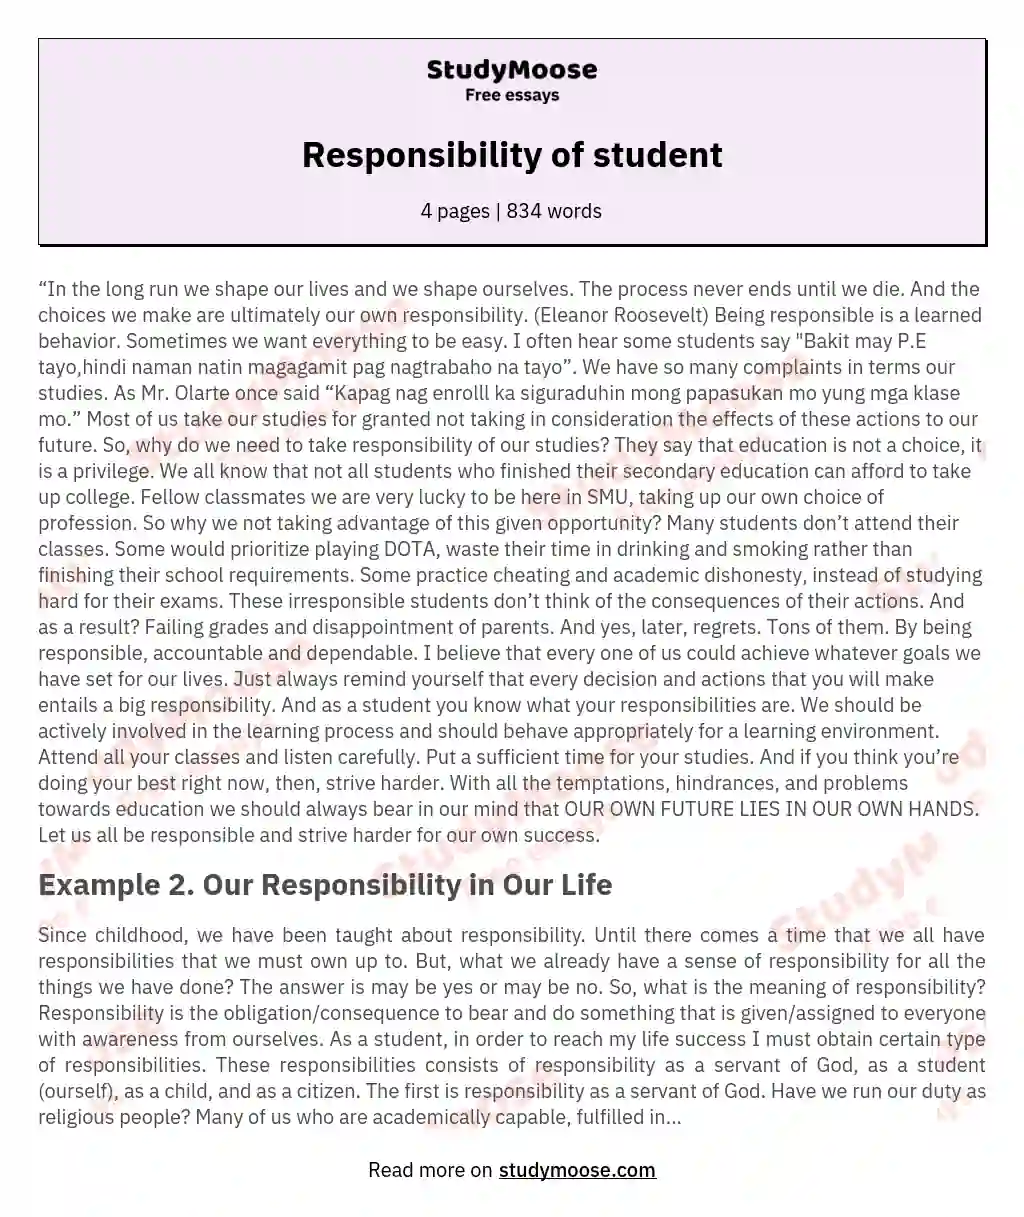 Responsibility of student essay